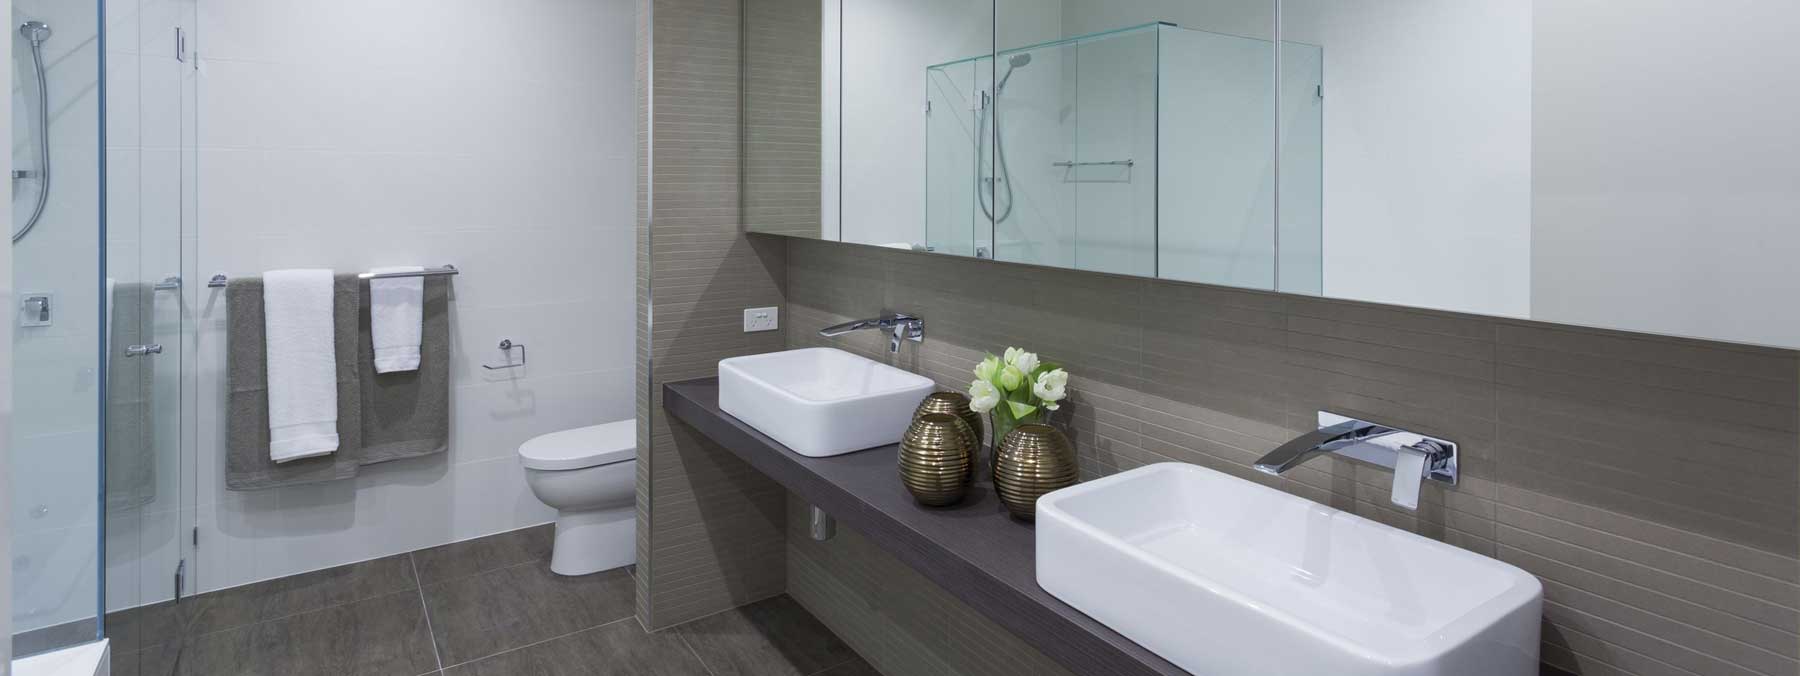 Bathroom Renovations Sydney Custom Bathrooms Designs Ideas